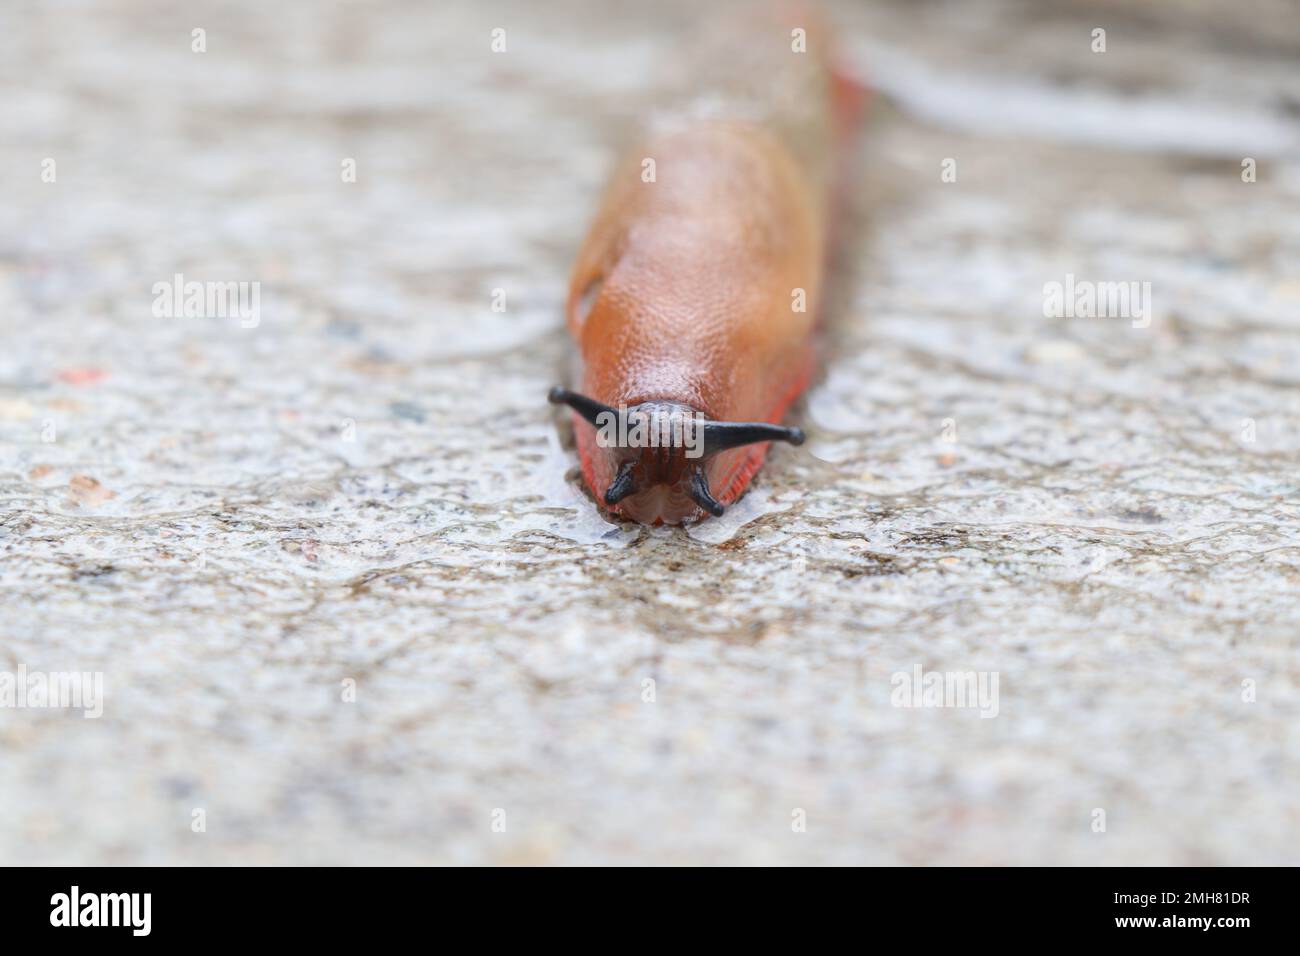 Big land slug or shell-less terrestrial gastropod mollusc hi-res Stock Photo